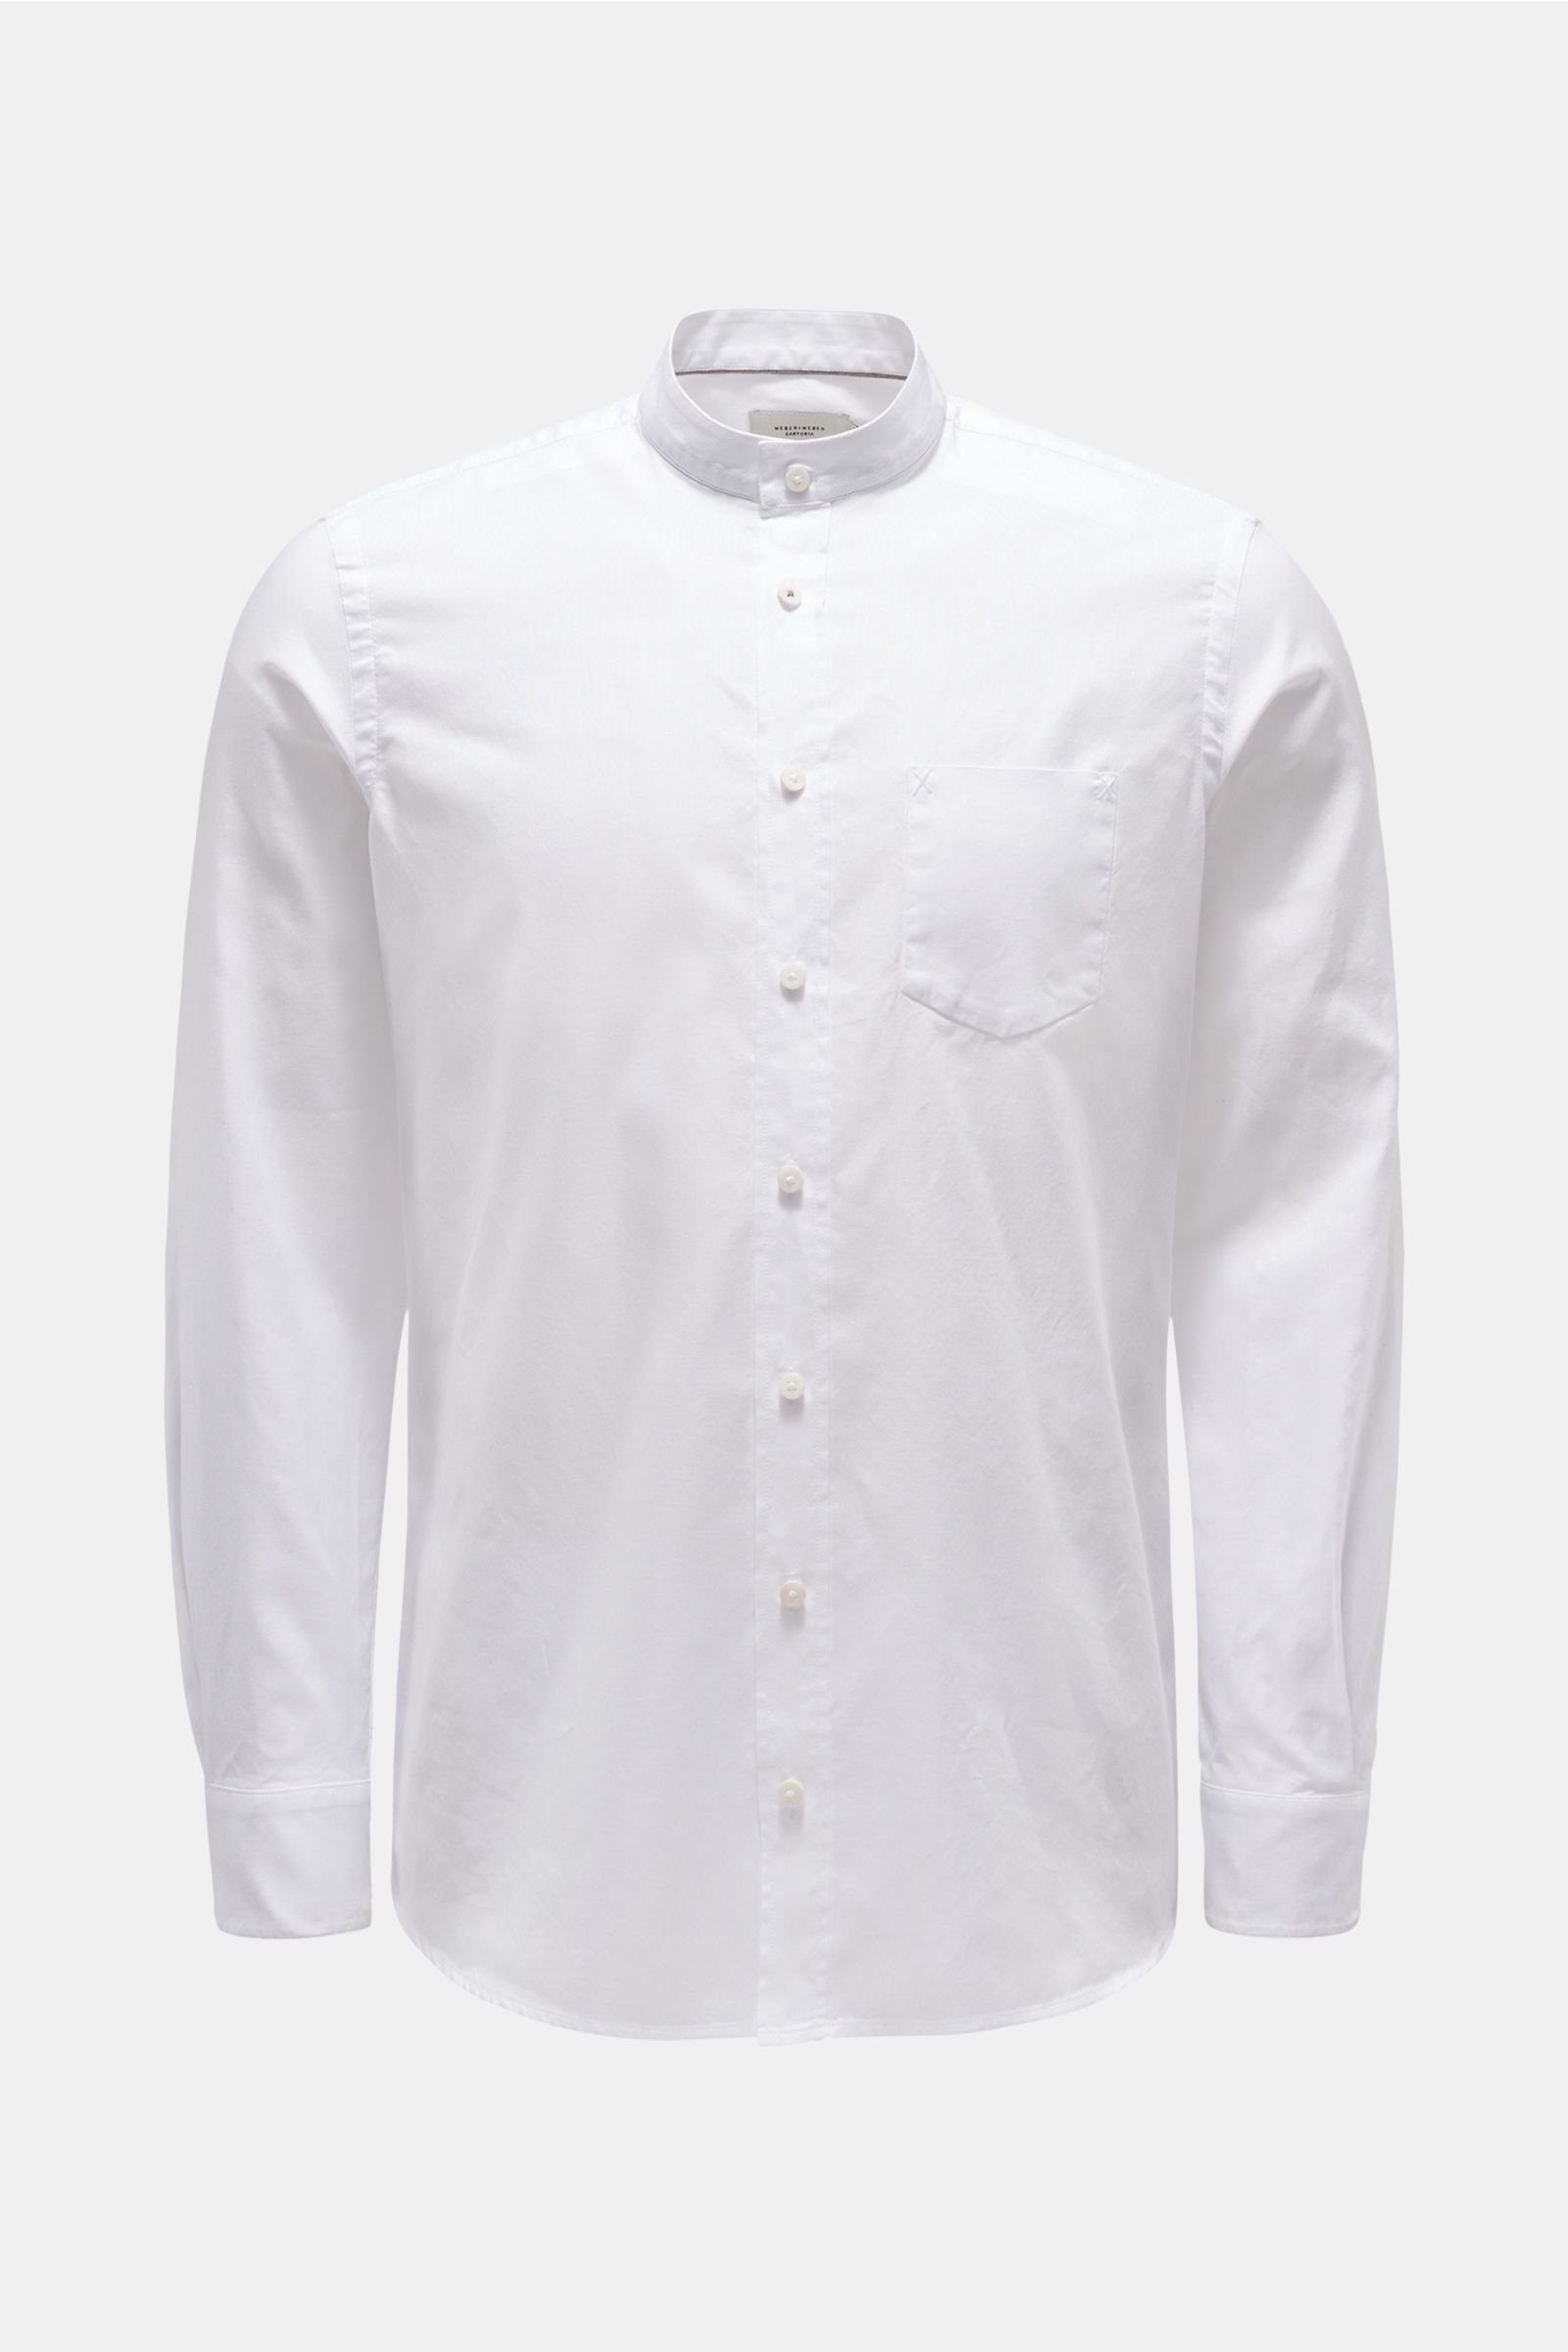 Oxford shirt grandad collar white